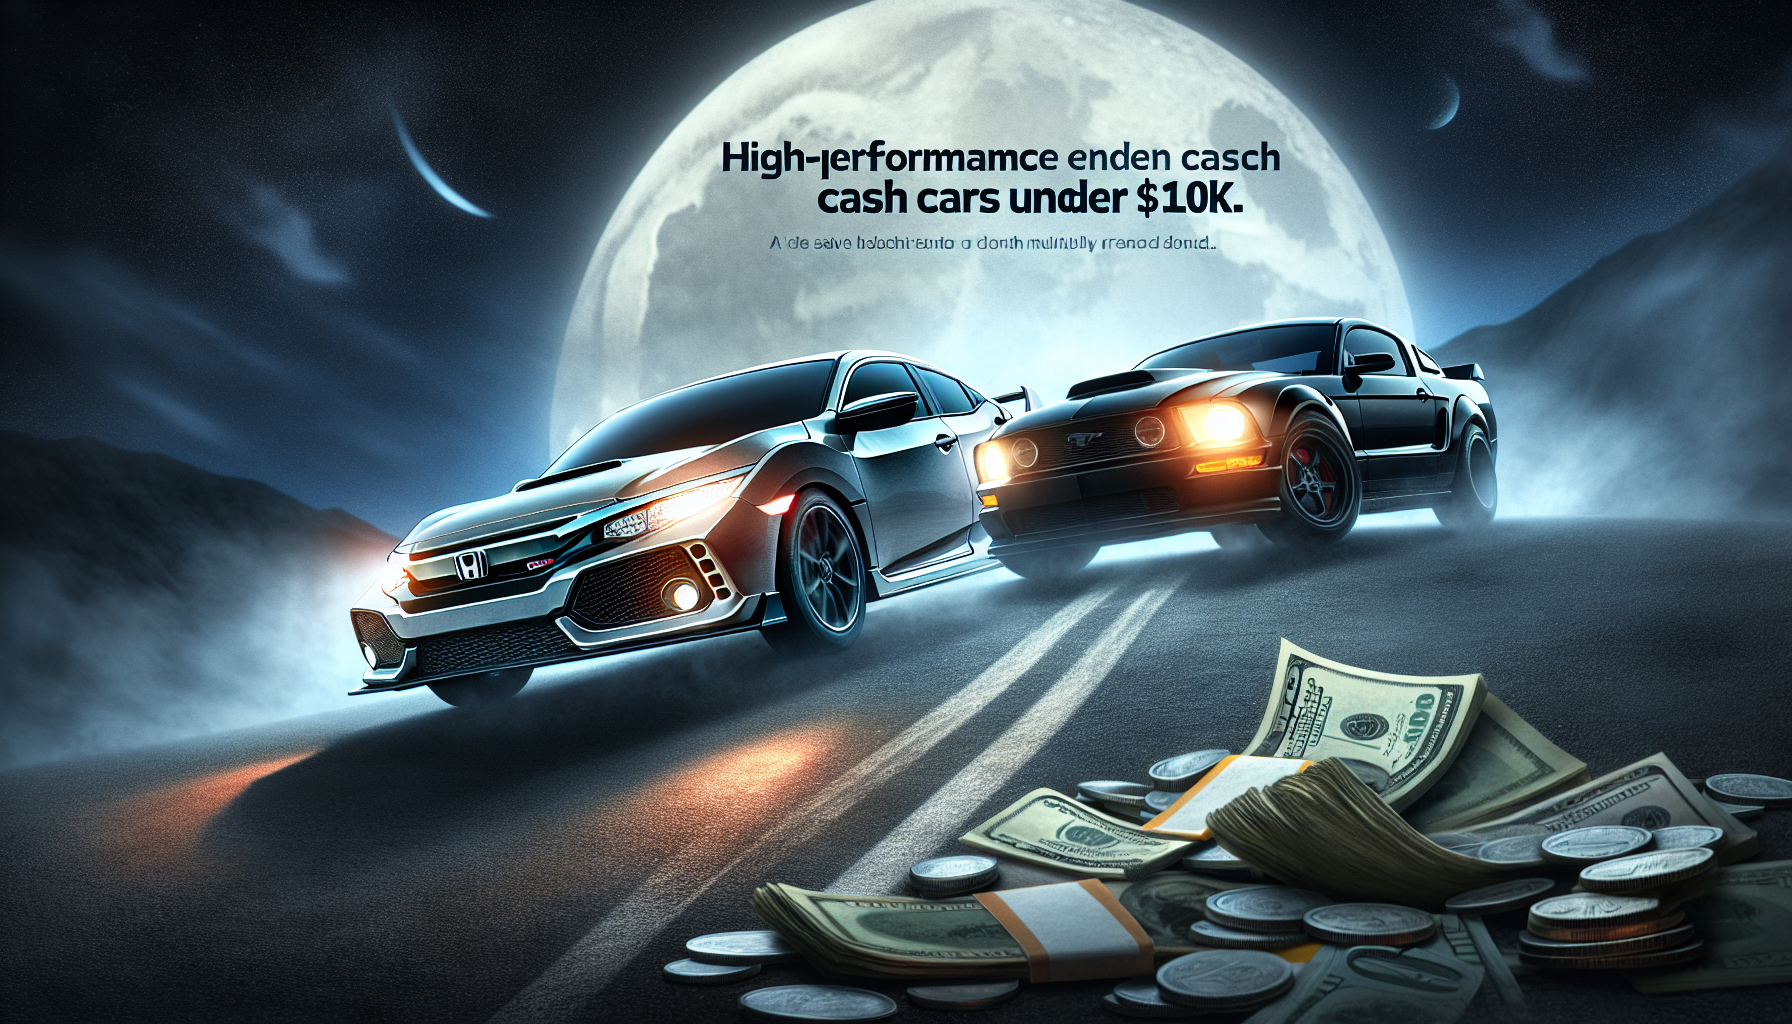 High-performance cash cars under $10k